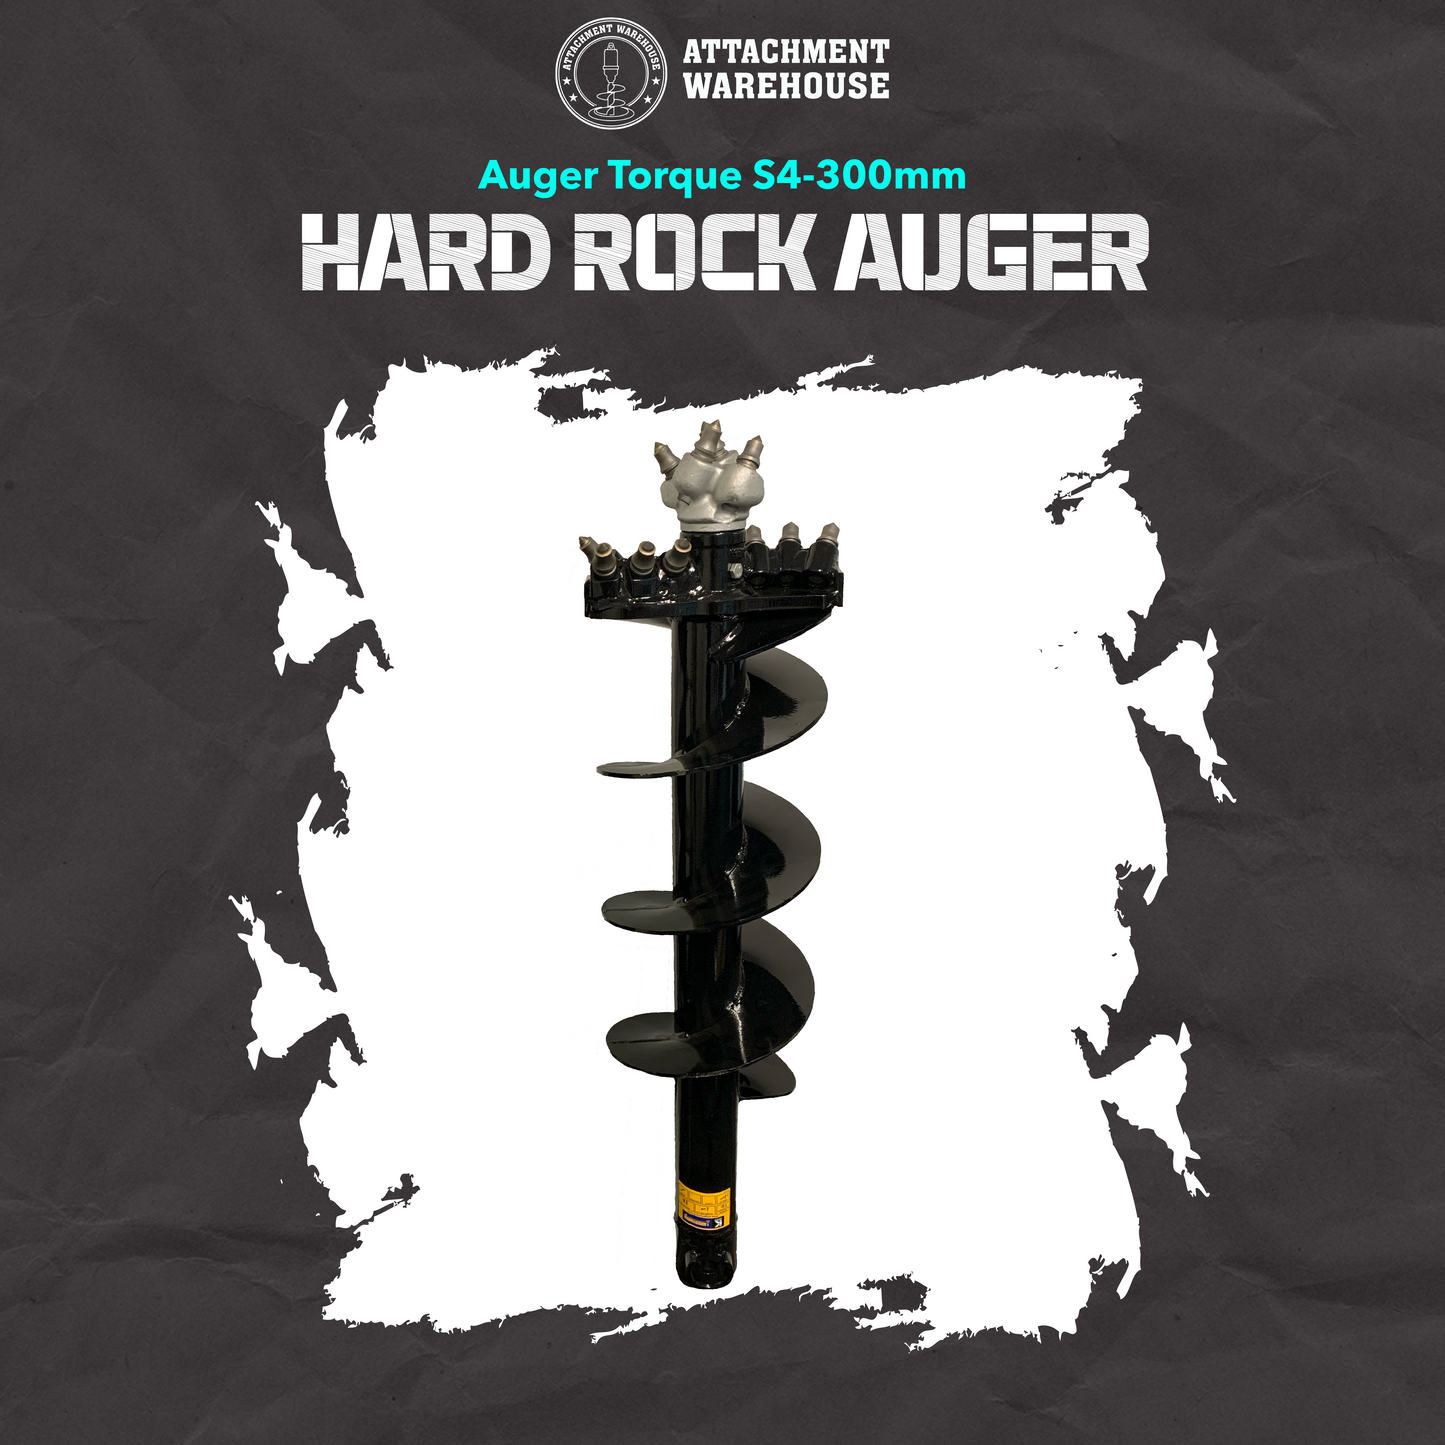 Attachment Warehouse S4 300mm Auger - Hard Rock